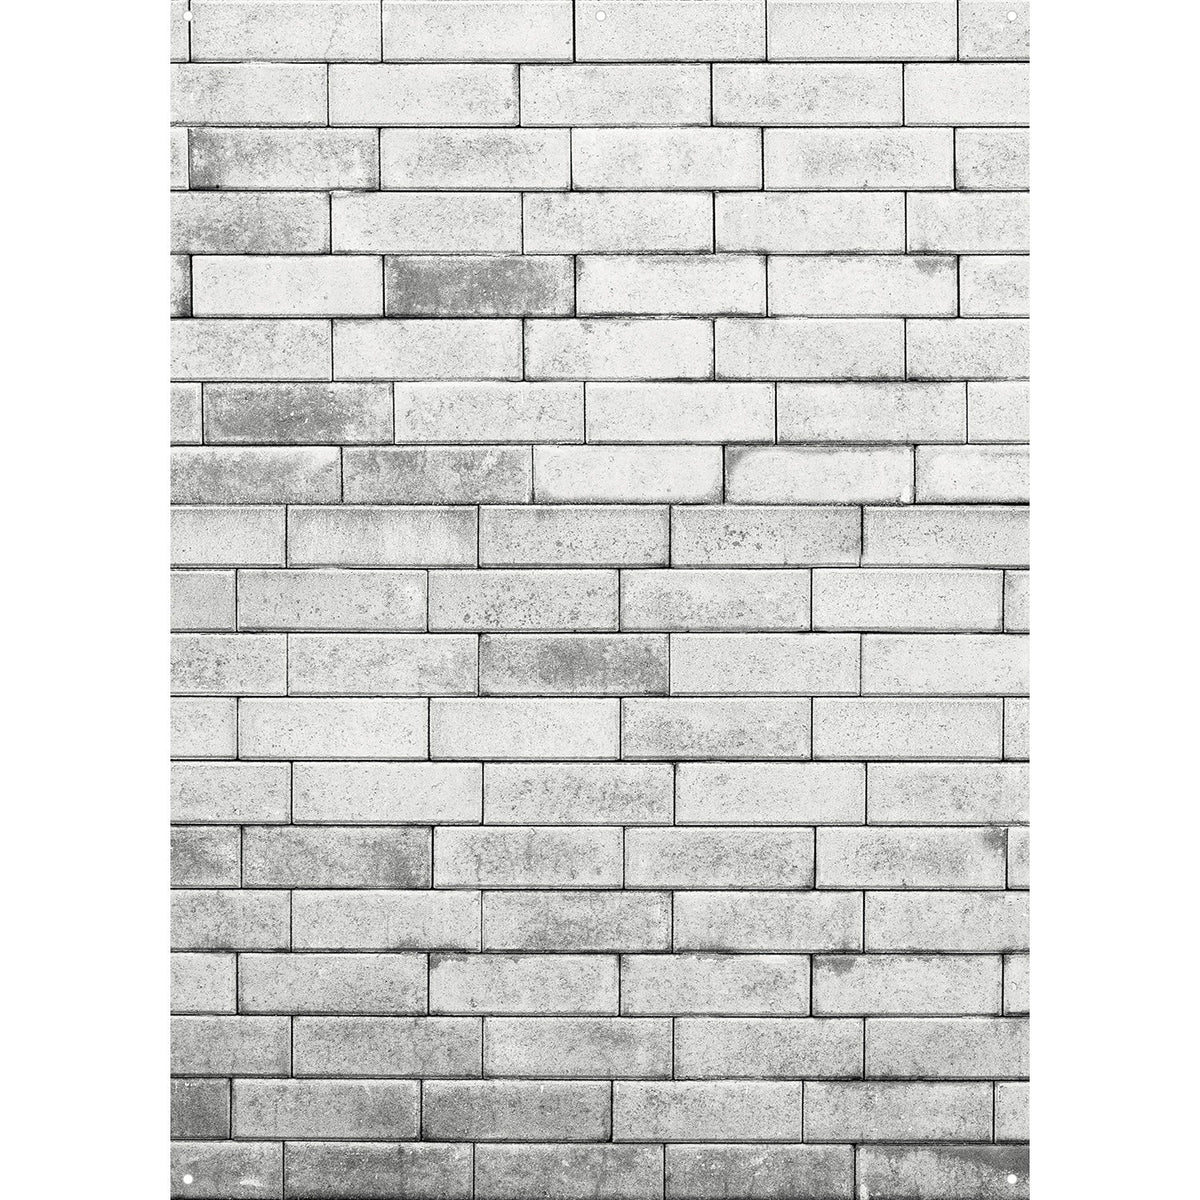 D0130 - X-Drop Backdrop - Gray Brick Wall (5' x 7') - X-Drop Backdrop - Gray Brick Wall (5' x 7') - D0130 - X-Drop Backdrop - Gray Brick Wall (5' x 7')